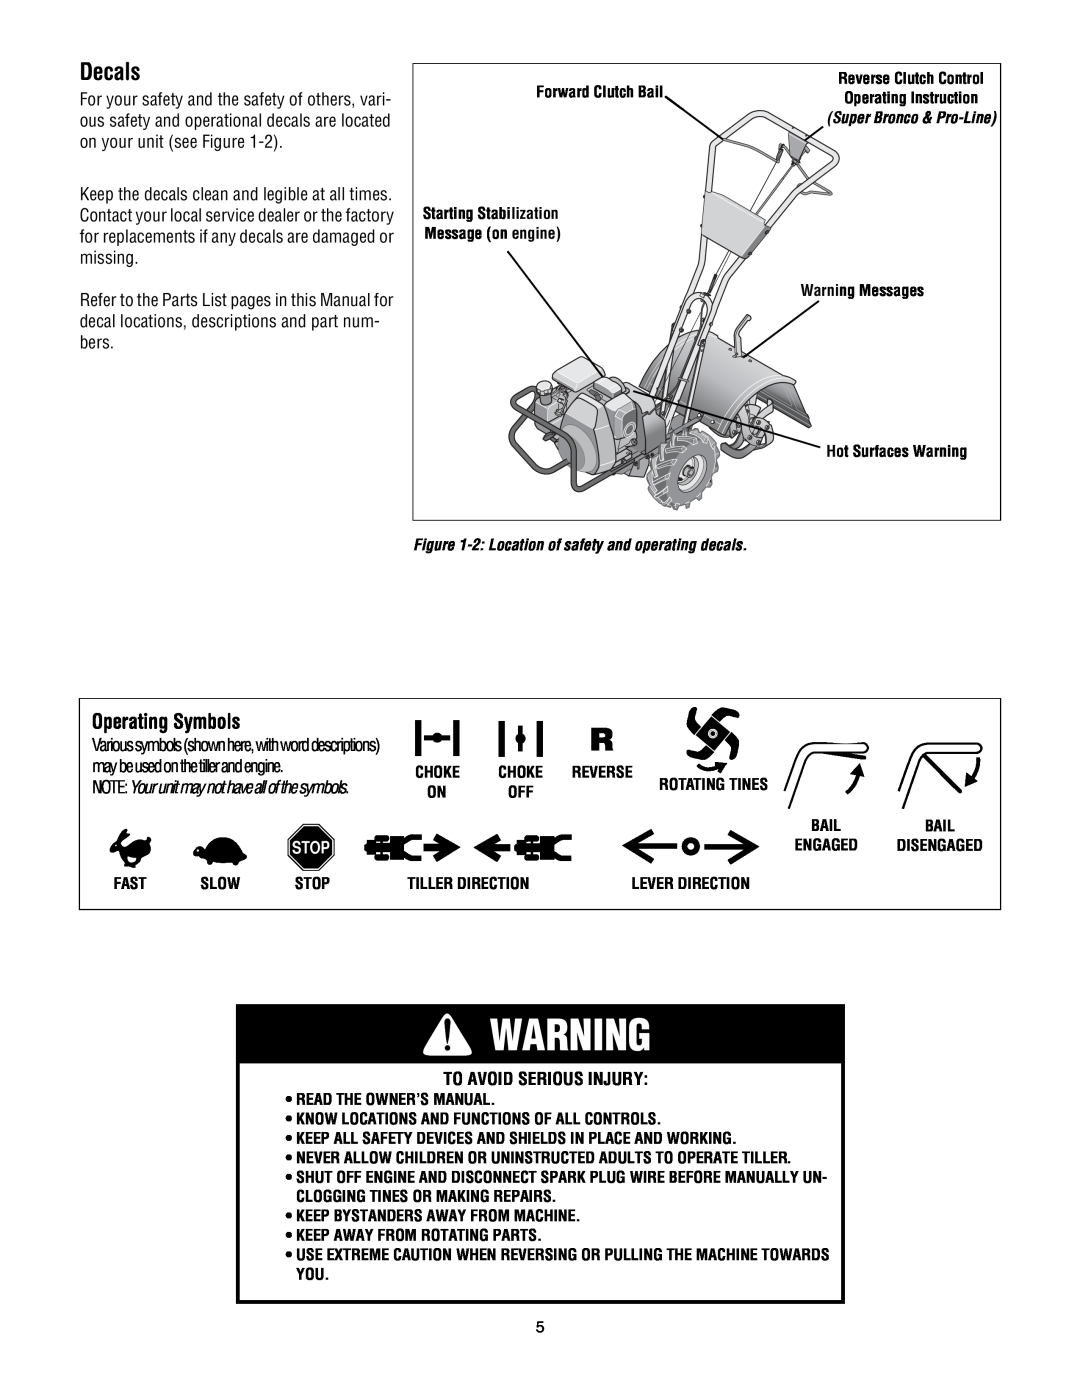 Troy-Bilt Super Bronco manual Decals, Operating Symbols, maybeusedonthetillerandengine, To Avoid Serious Injury 